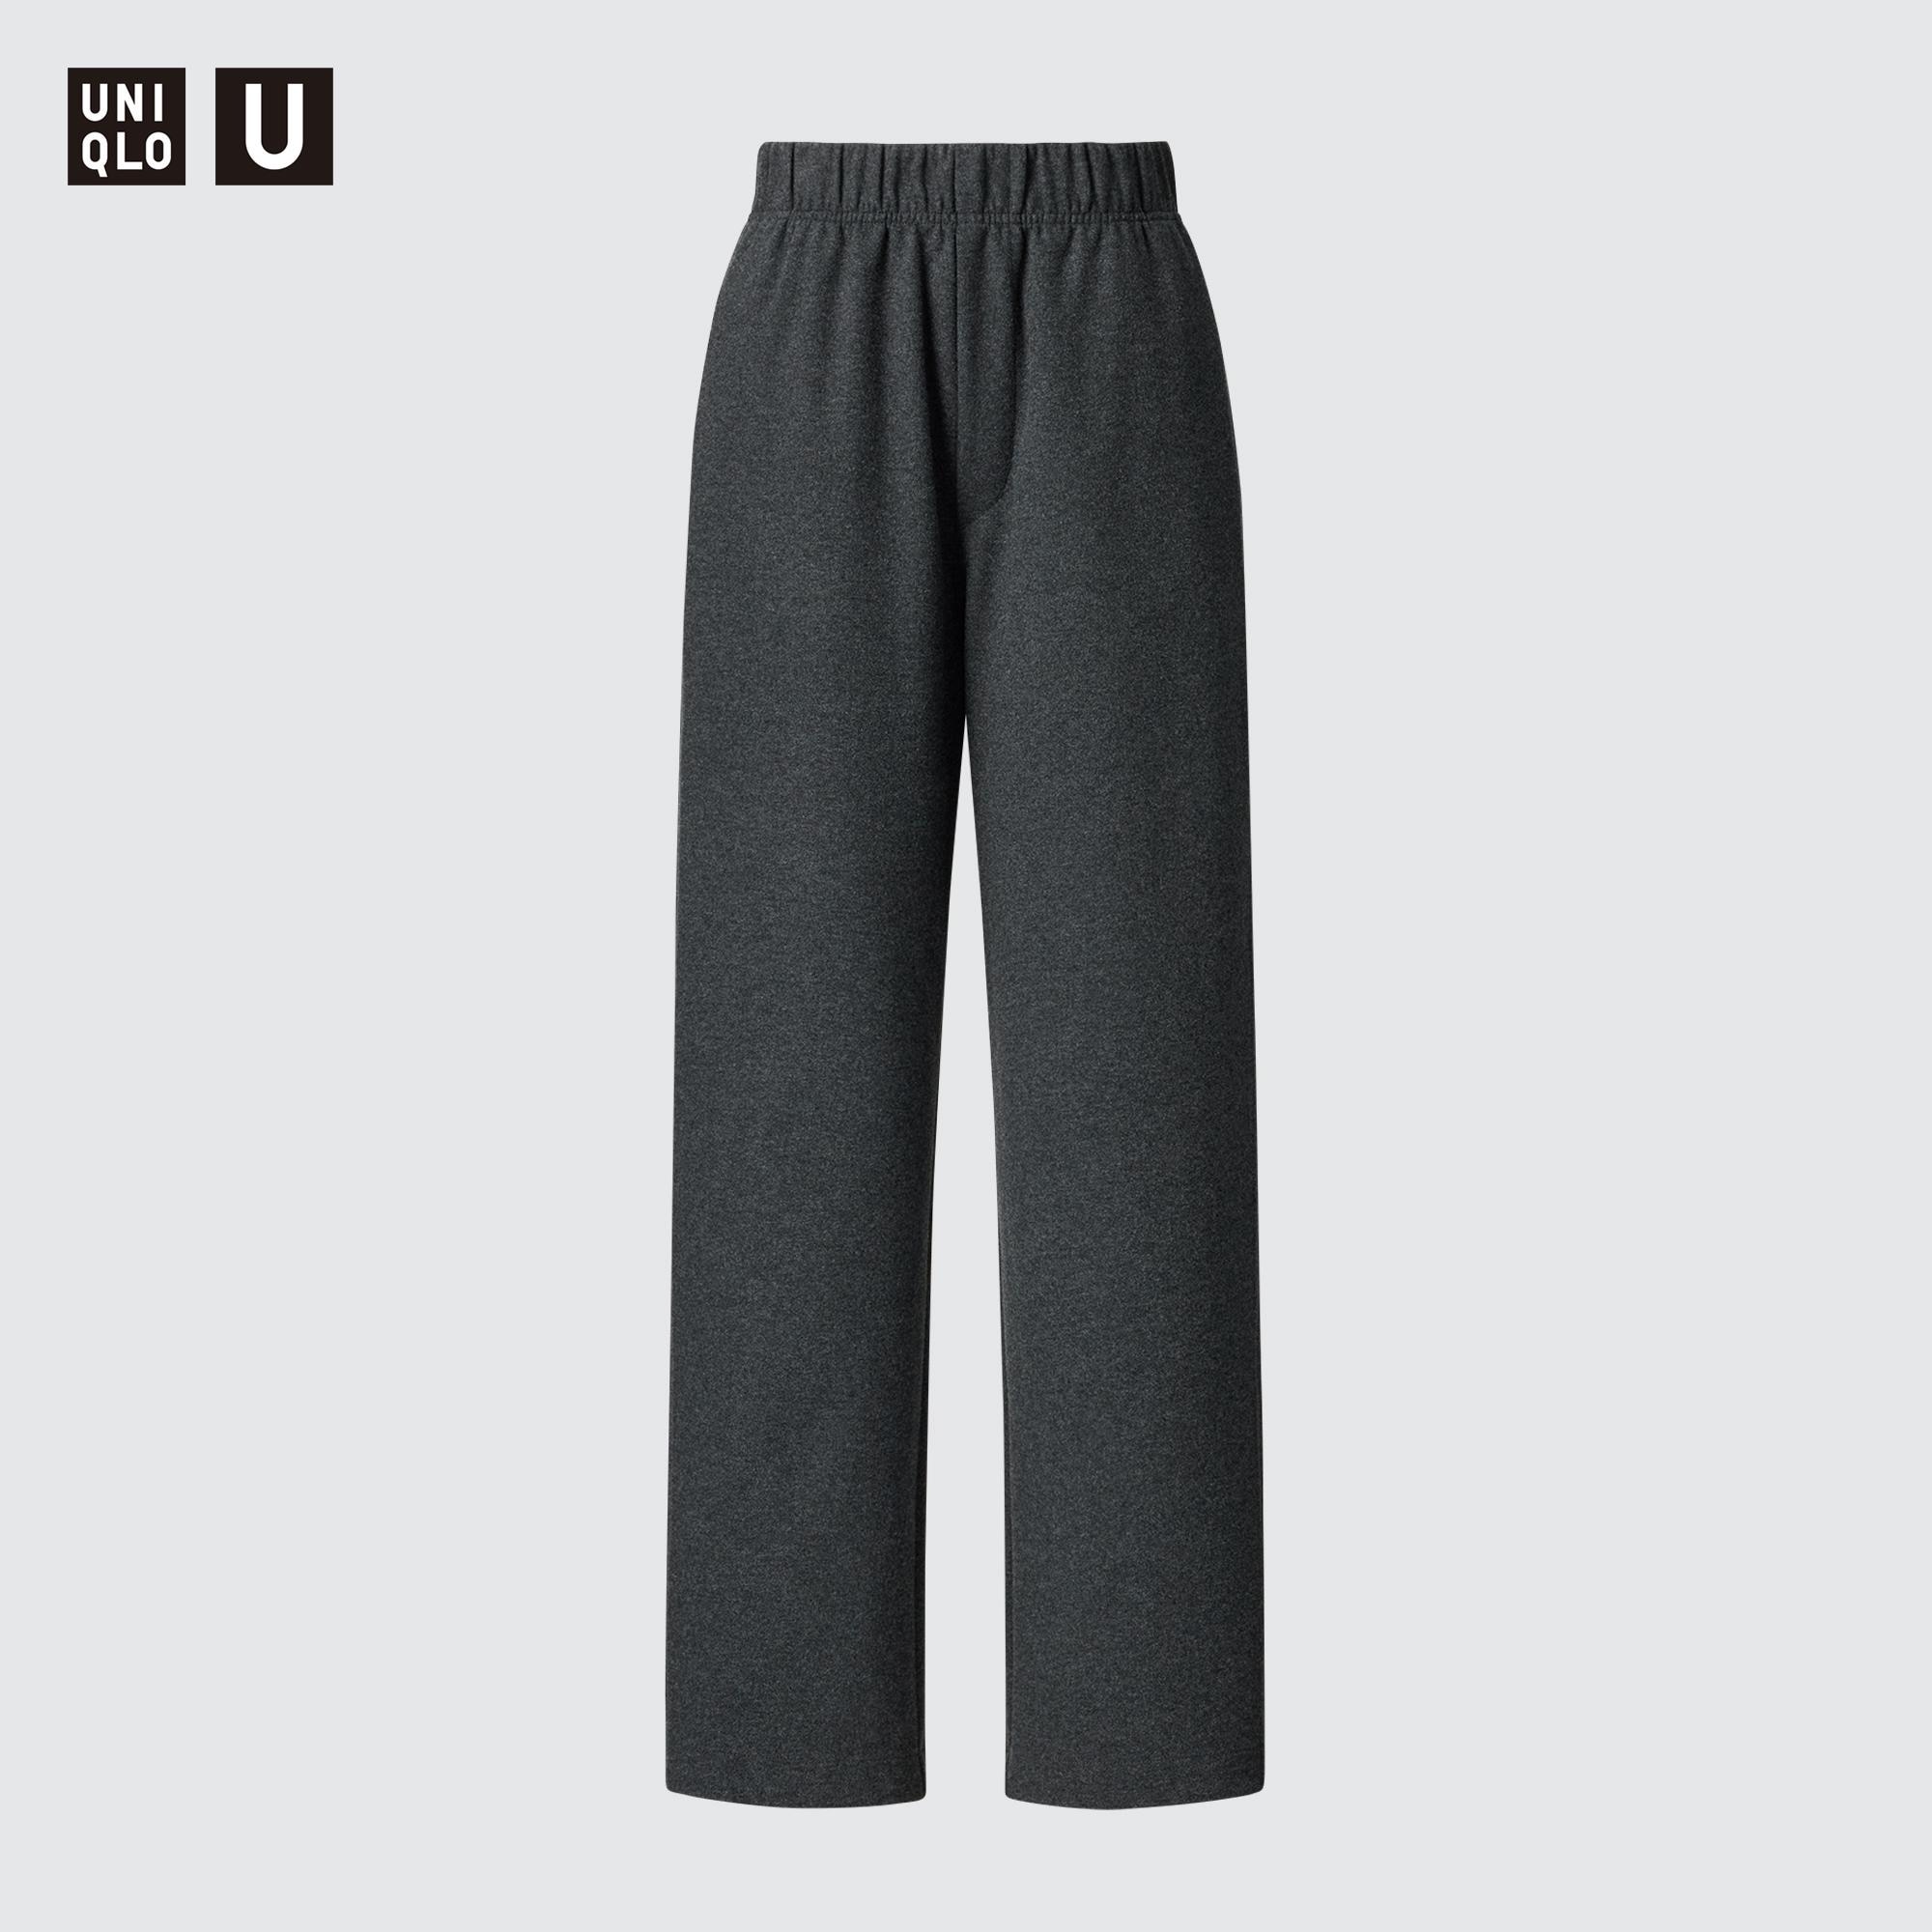 Jersey crêpe trousers - Black - Ladies | H&M IN